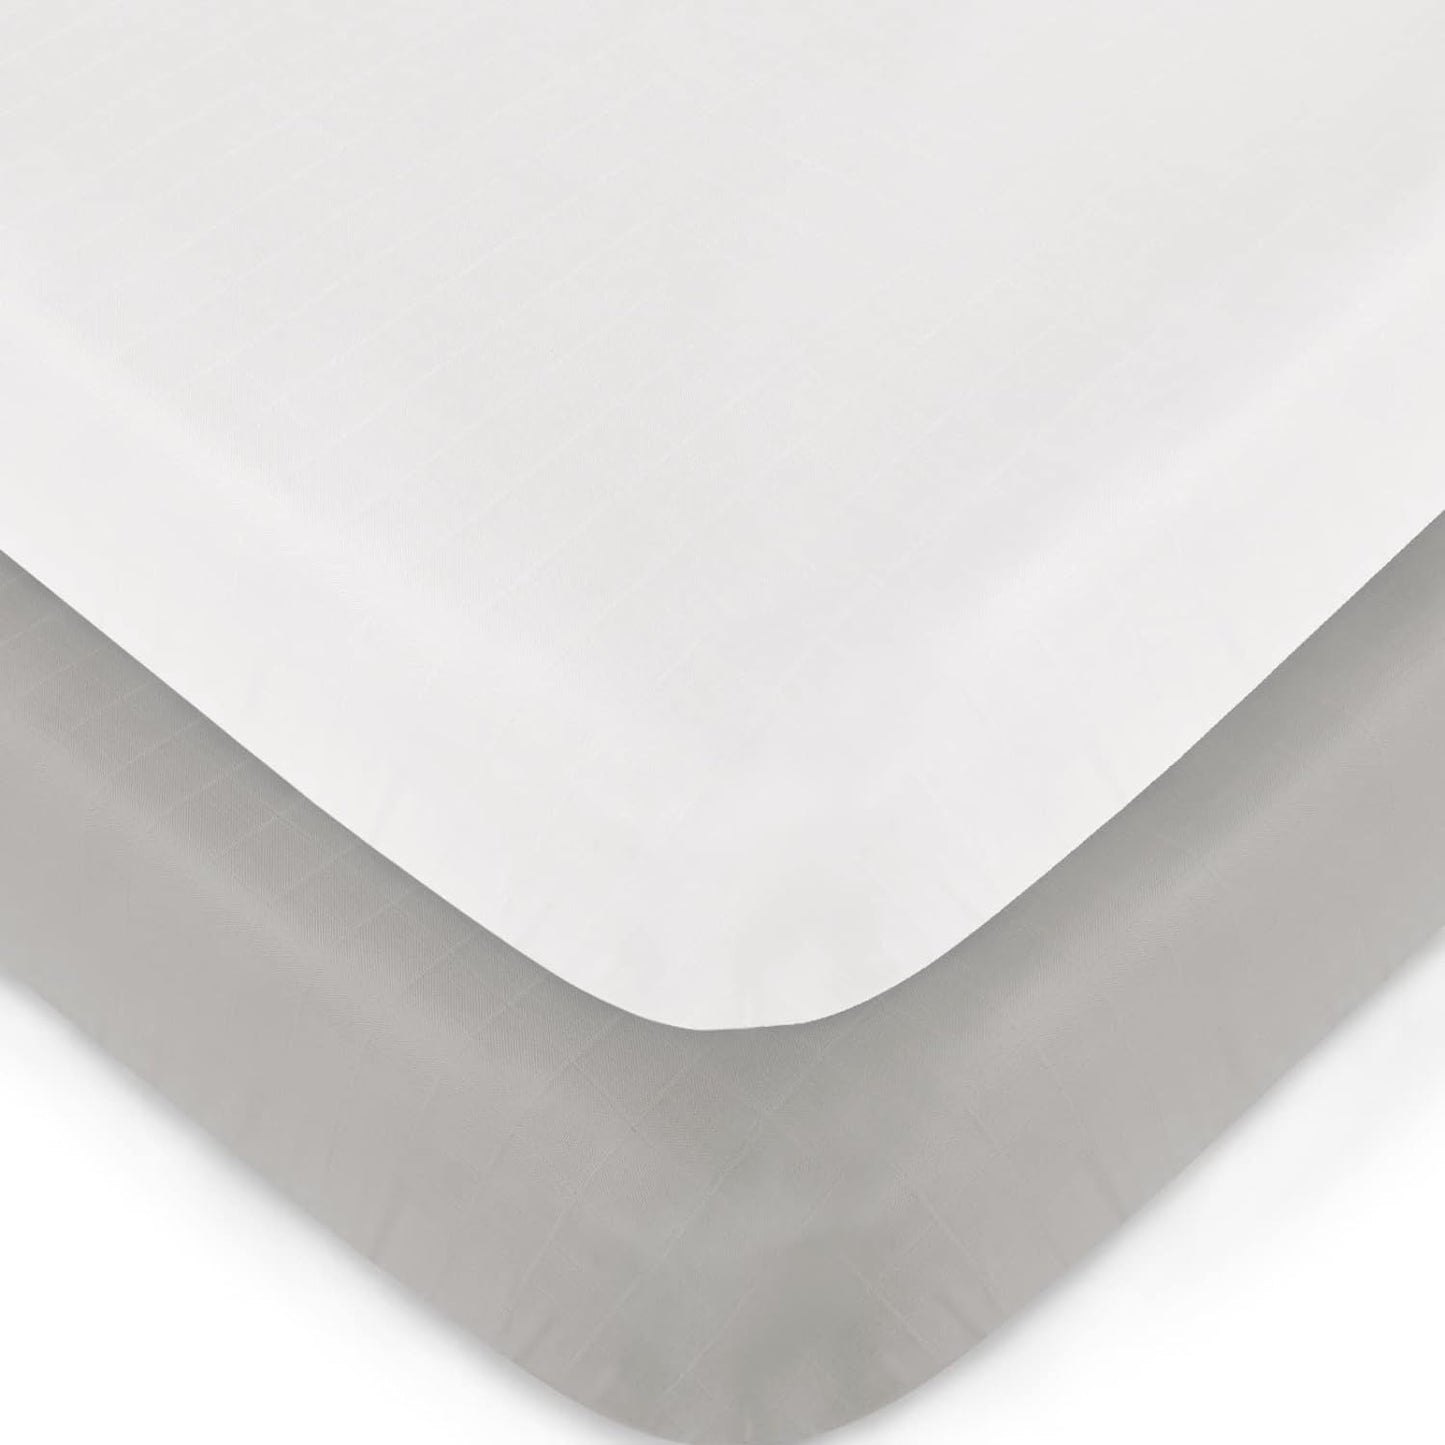 Crib Sheets - 2 Pack, Muslin ( for Standard Crib 52"x28" ), White& Gray